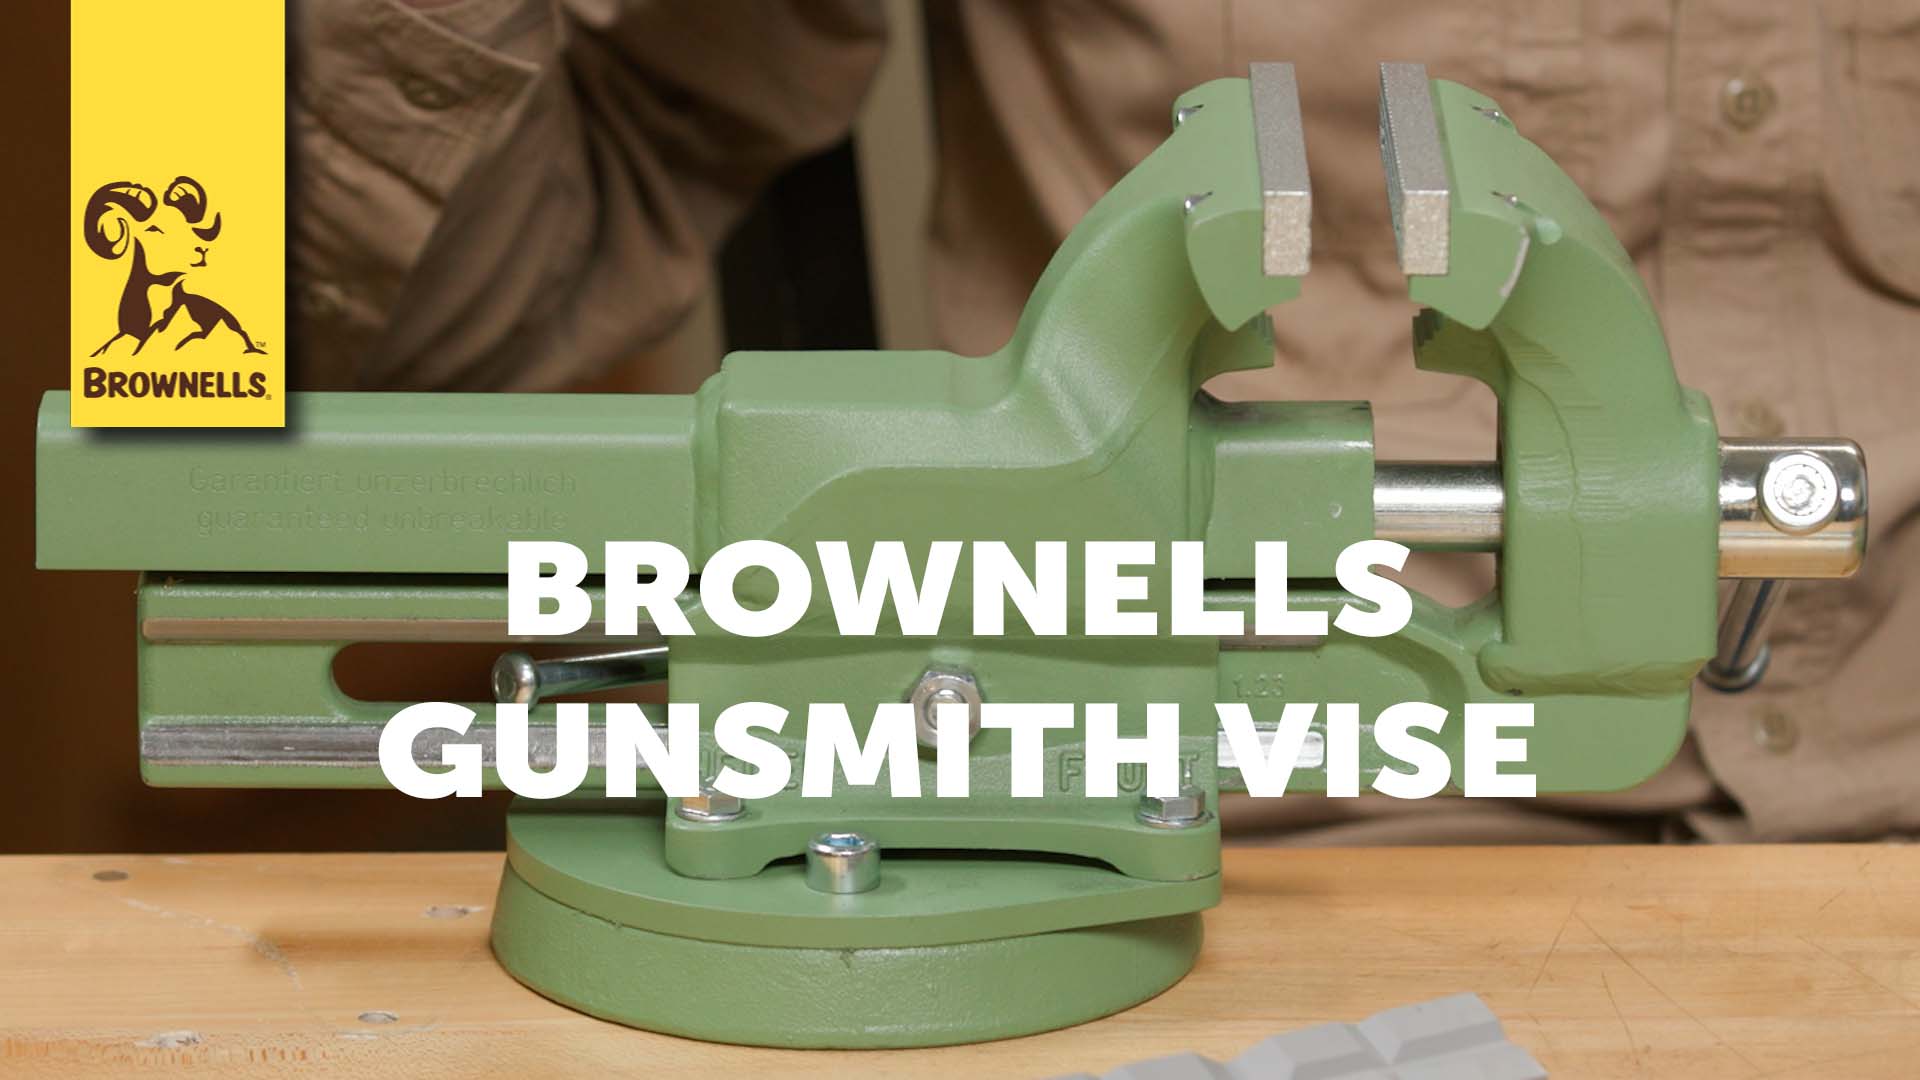 Product Spotlight: Brownells Gunsmith Vise